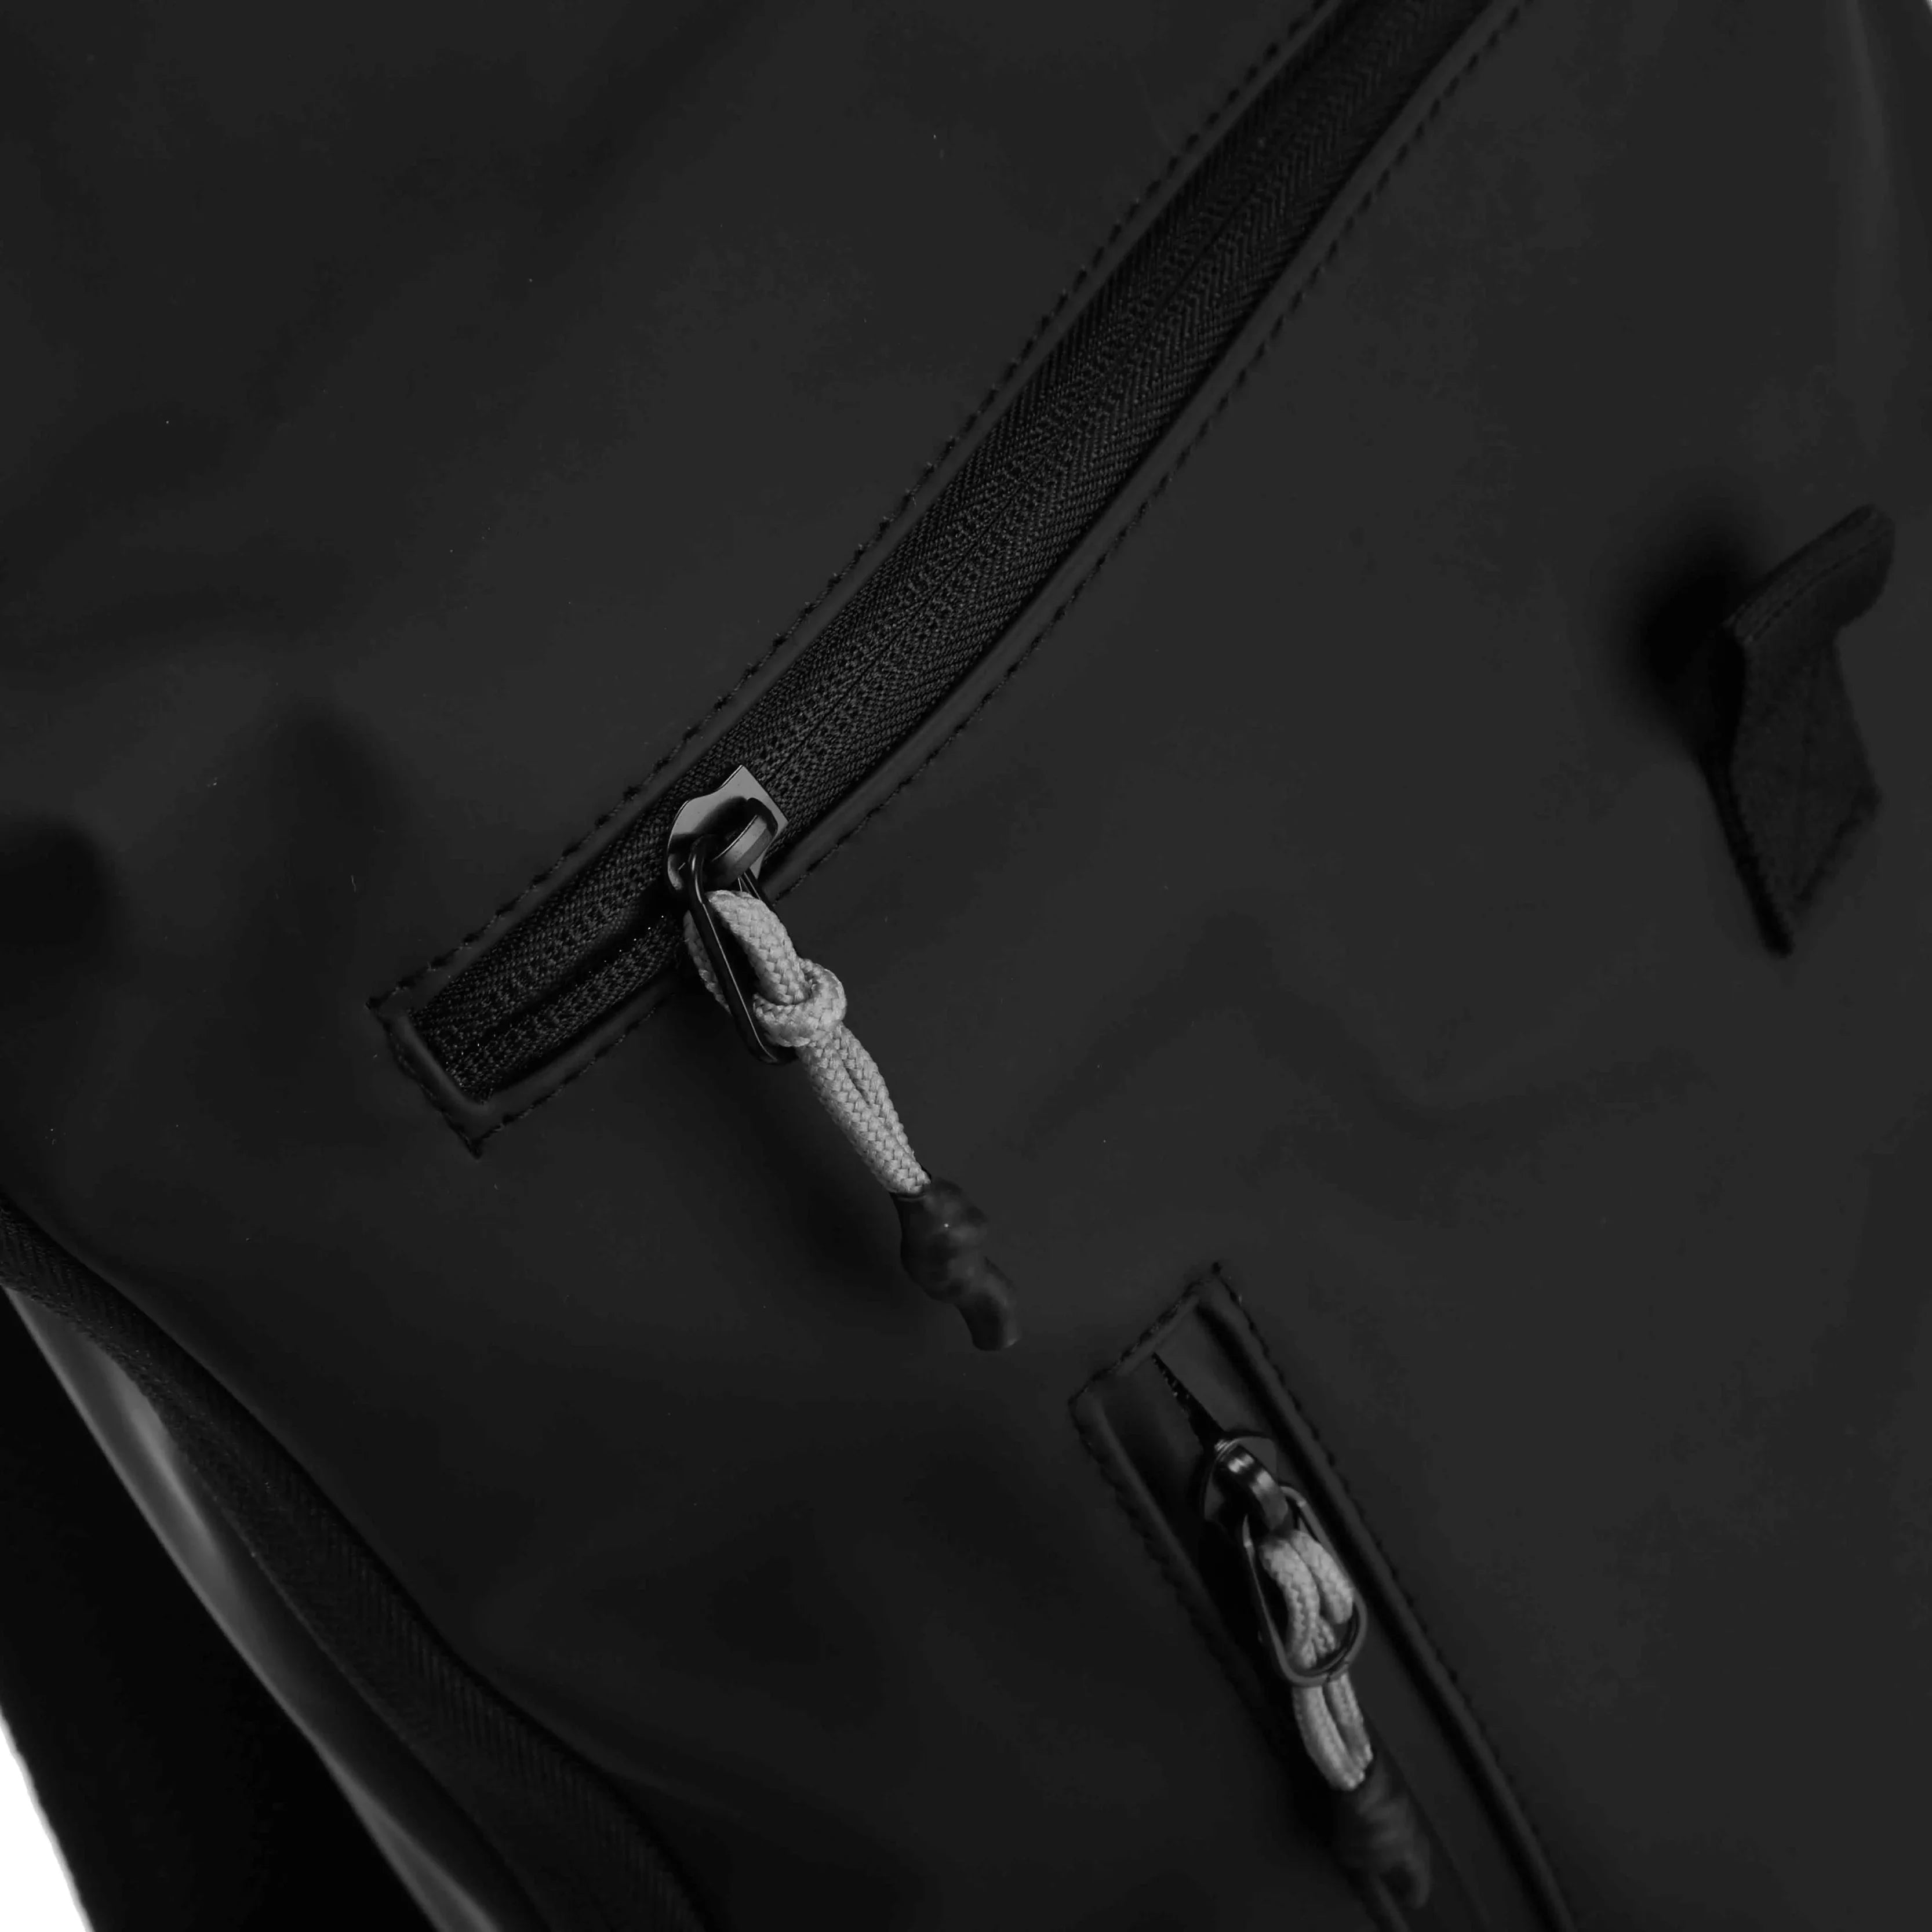 koffer-direkt.de Rolltop leisure backpack 41 cm - dark blue